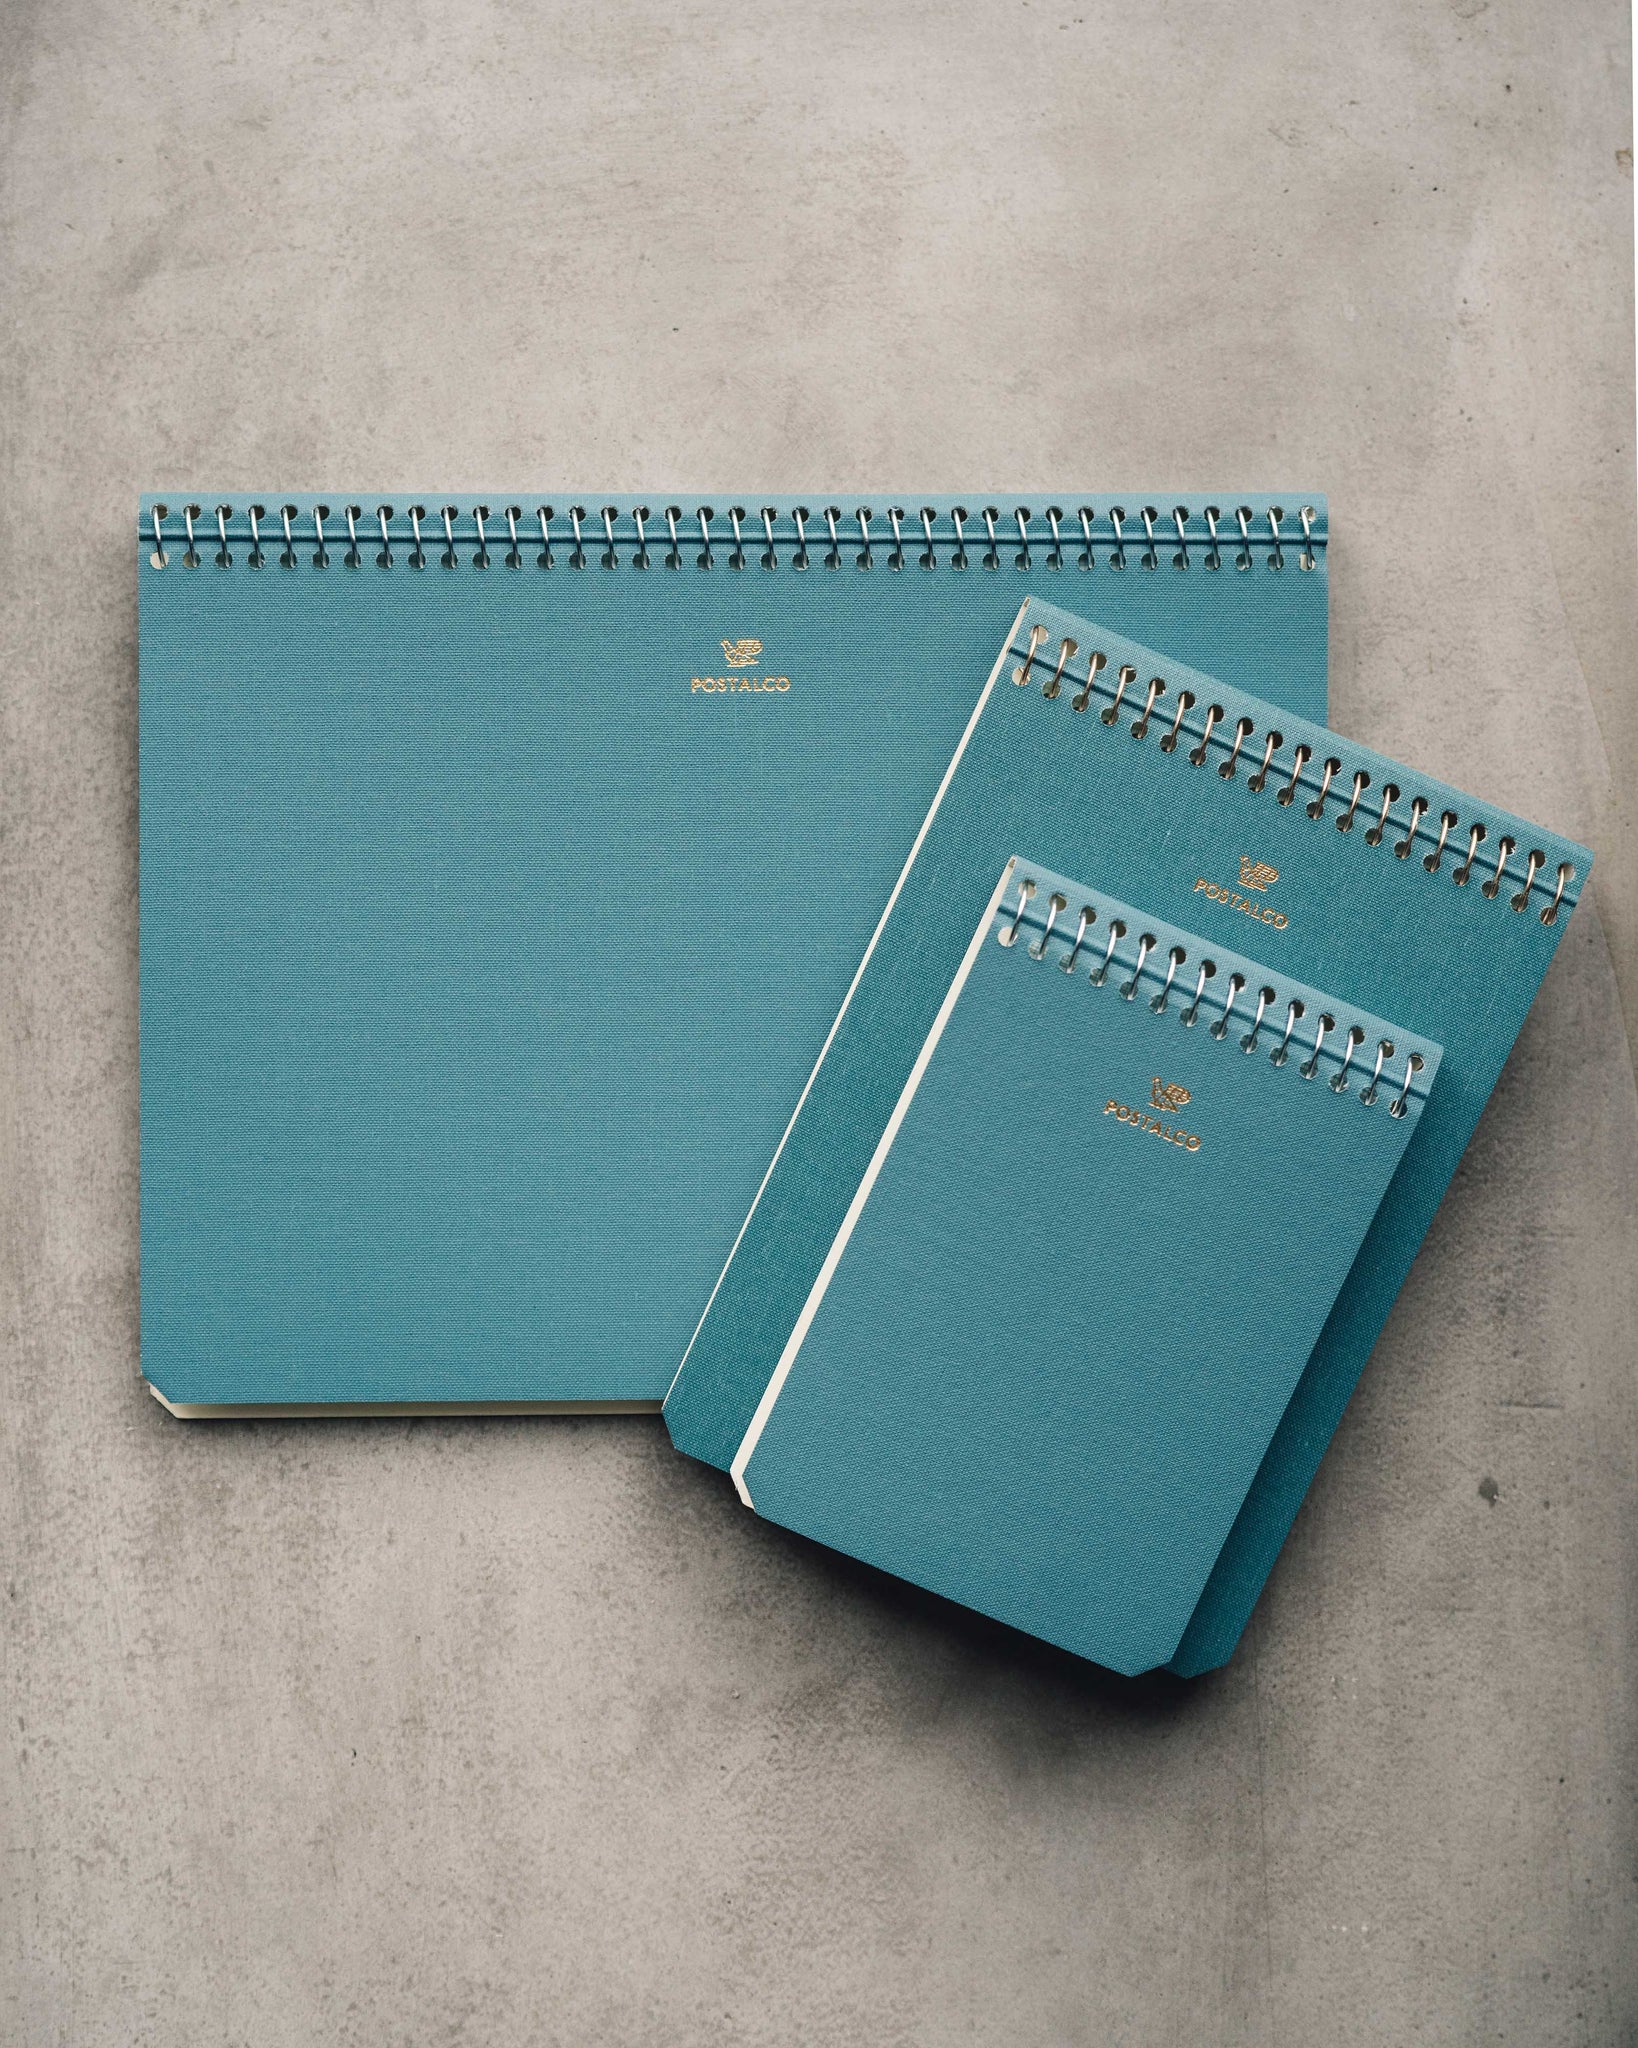 Postalco Light Blue Notebooks